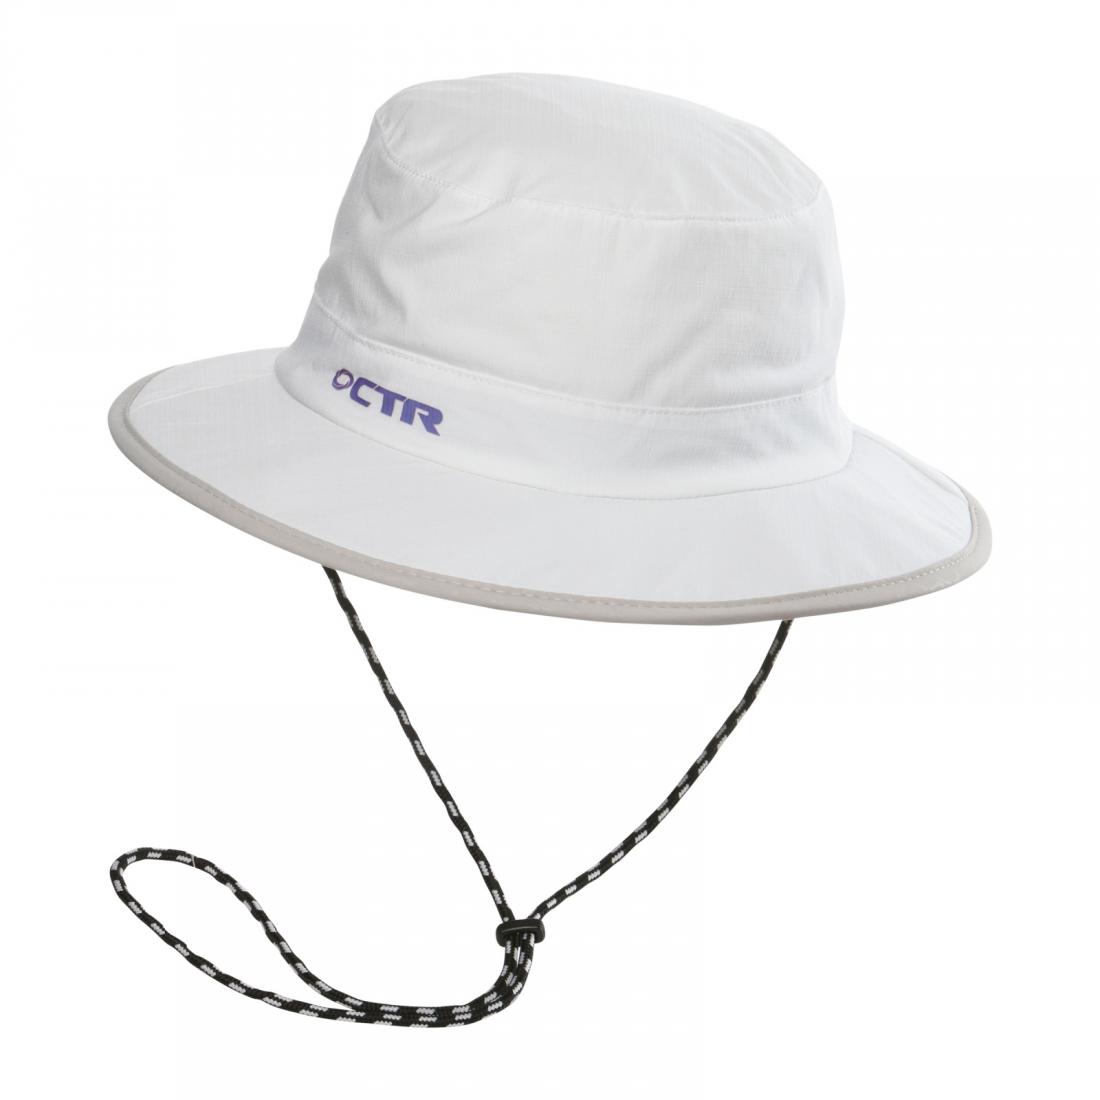 Панама Chaos  Summit Day Hat (женс) Chaos CTR, цвет белый, размер S-M Панама Chaos  Summit Day Hat (женс) - фото 1